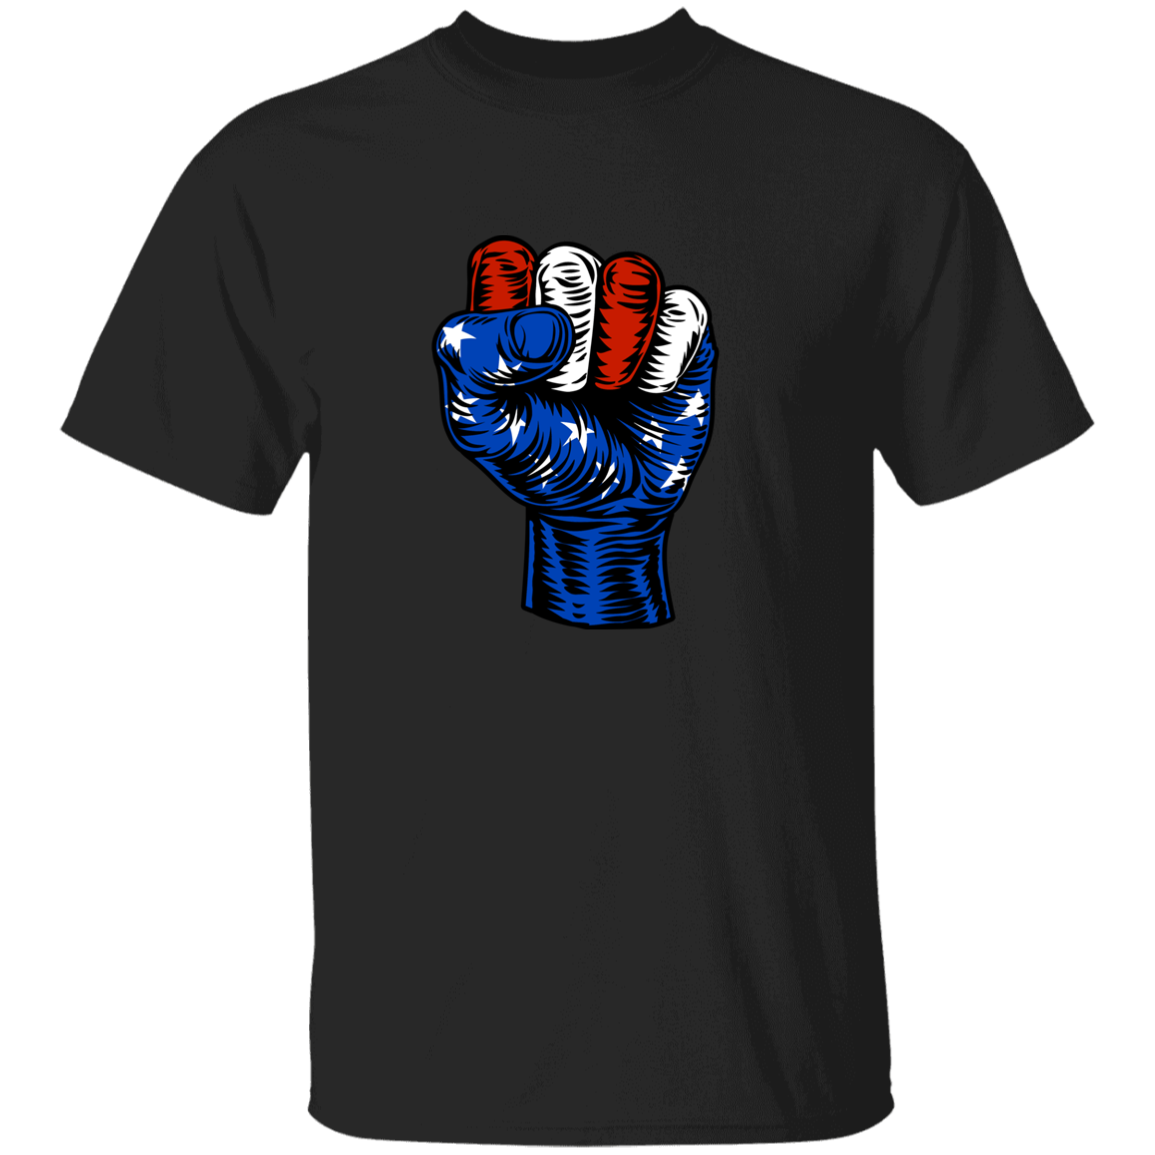 Fist Pump Patriotic T-Shirt